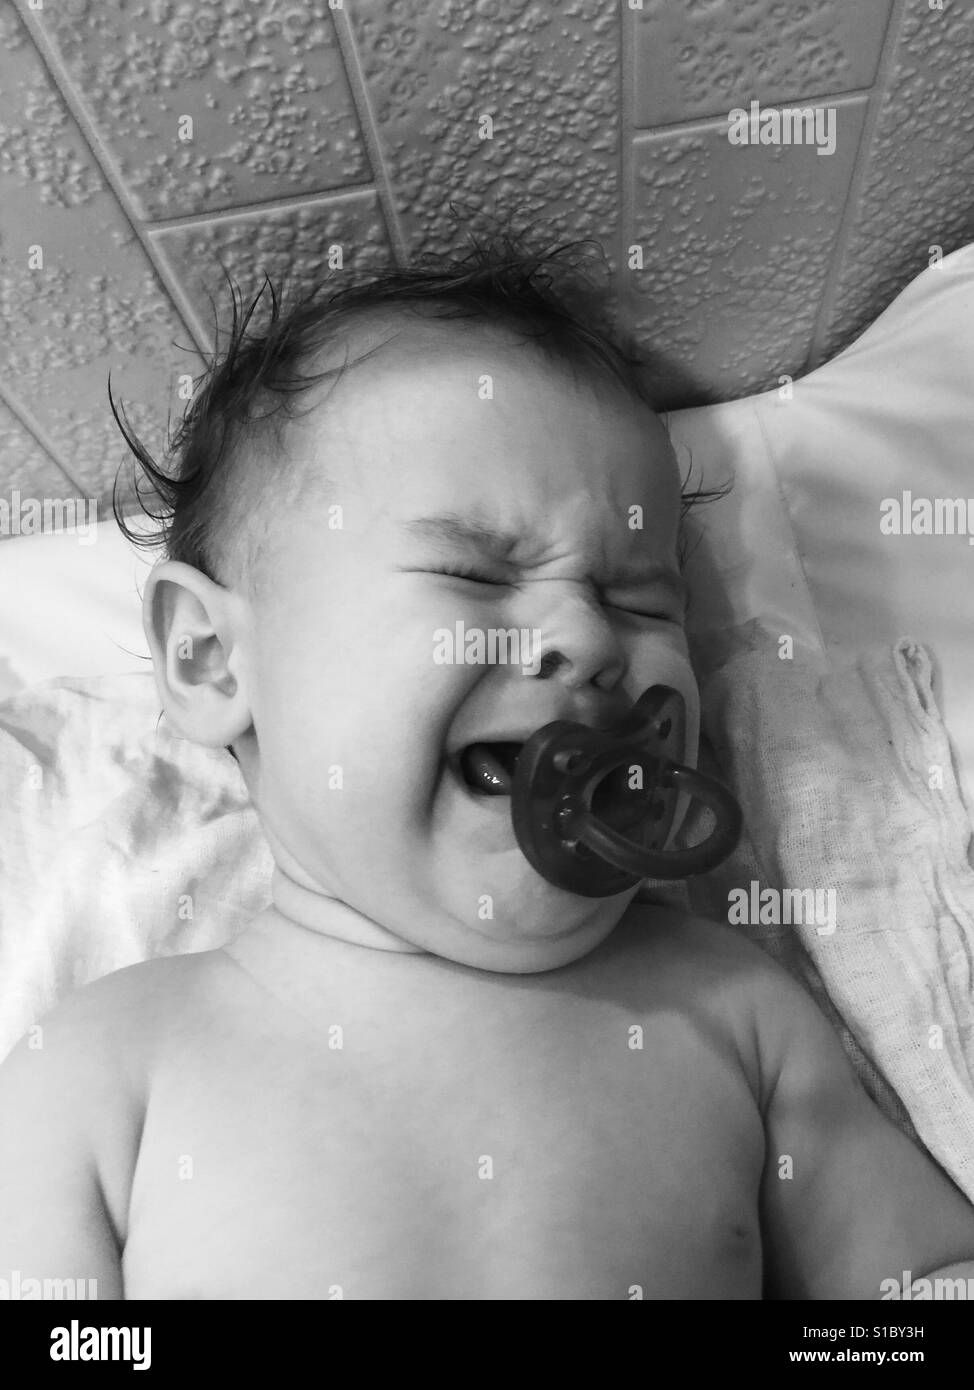 Crying baby Stock Photo